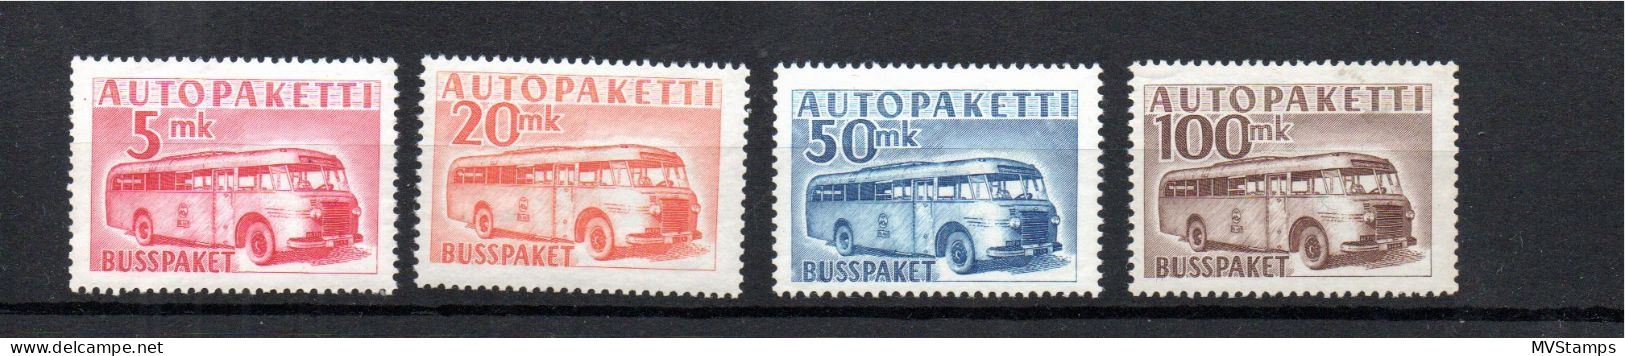 Finnland 1949 Satz APM 6/9 Auto-Paketmarken/Autopaketti Postfrisch - Colis Par Autobus